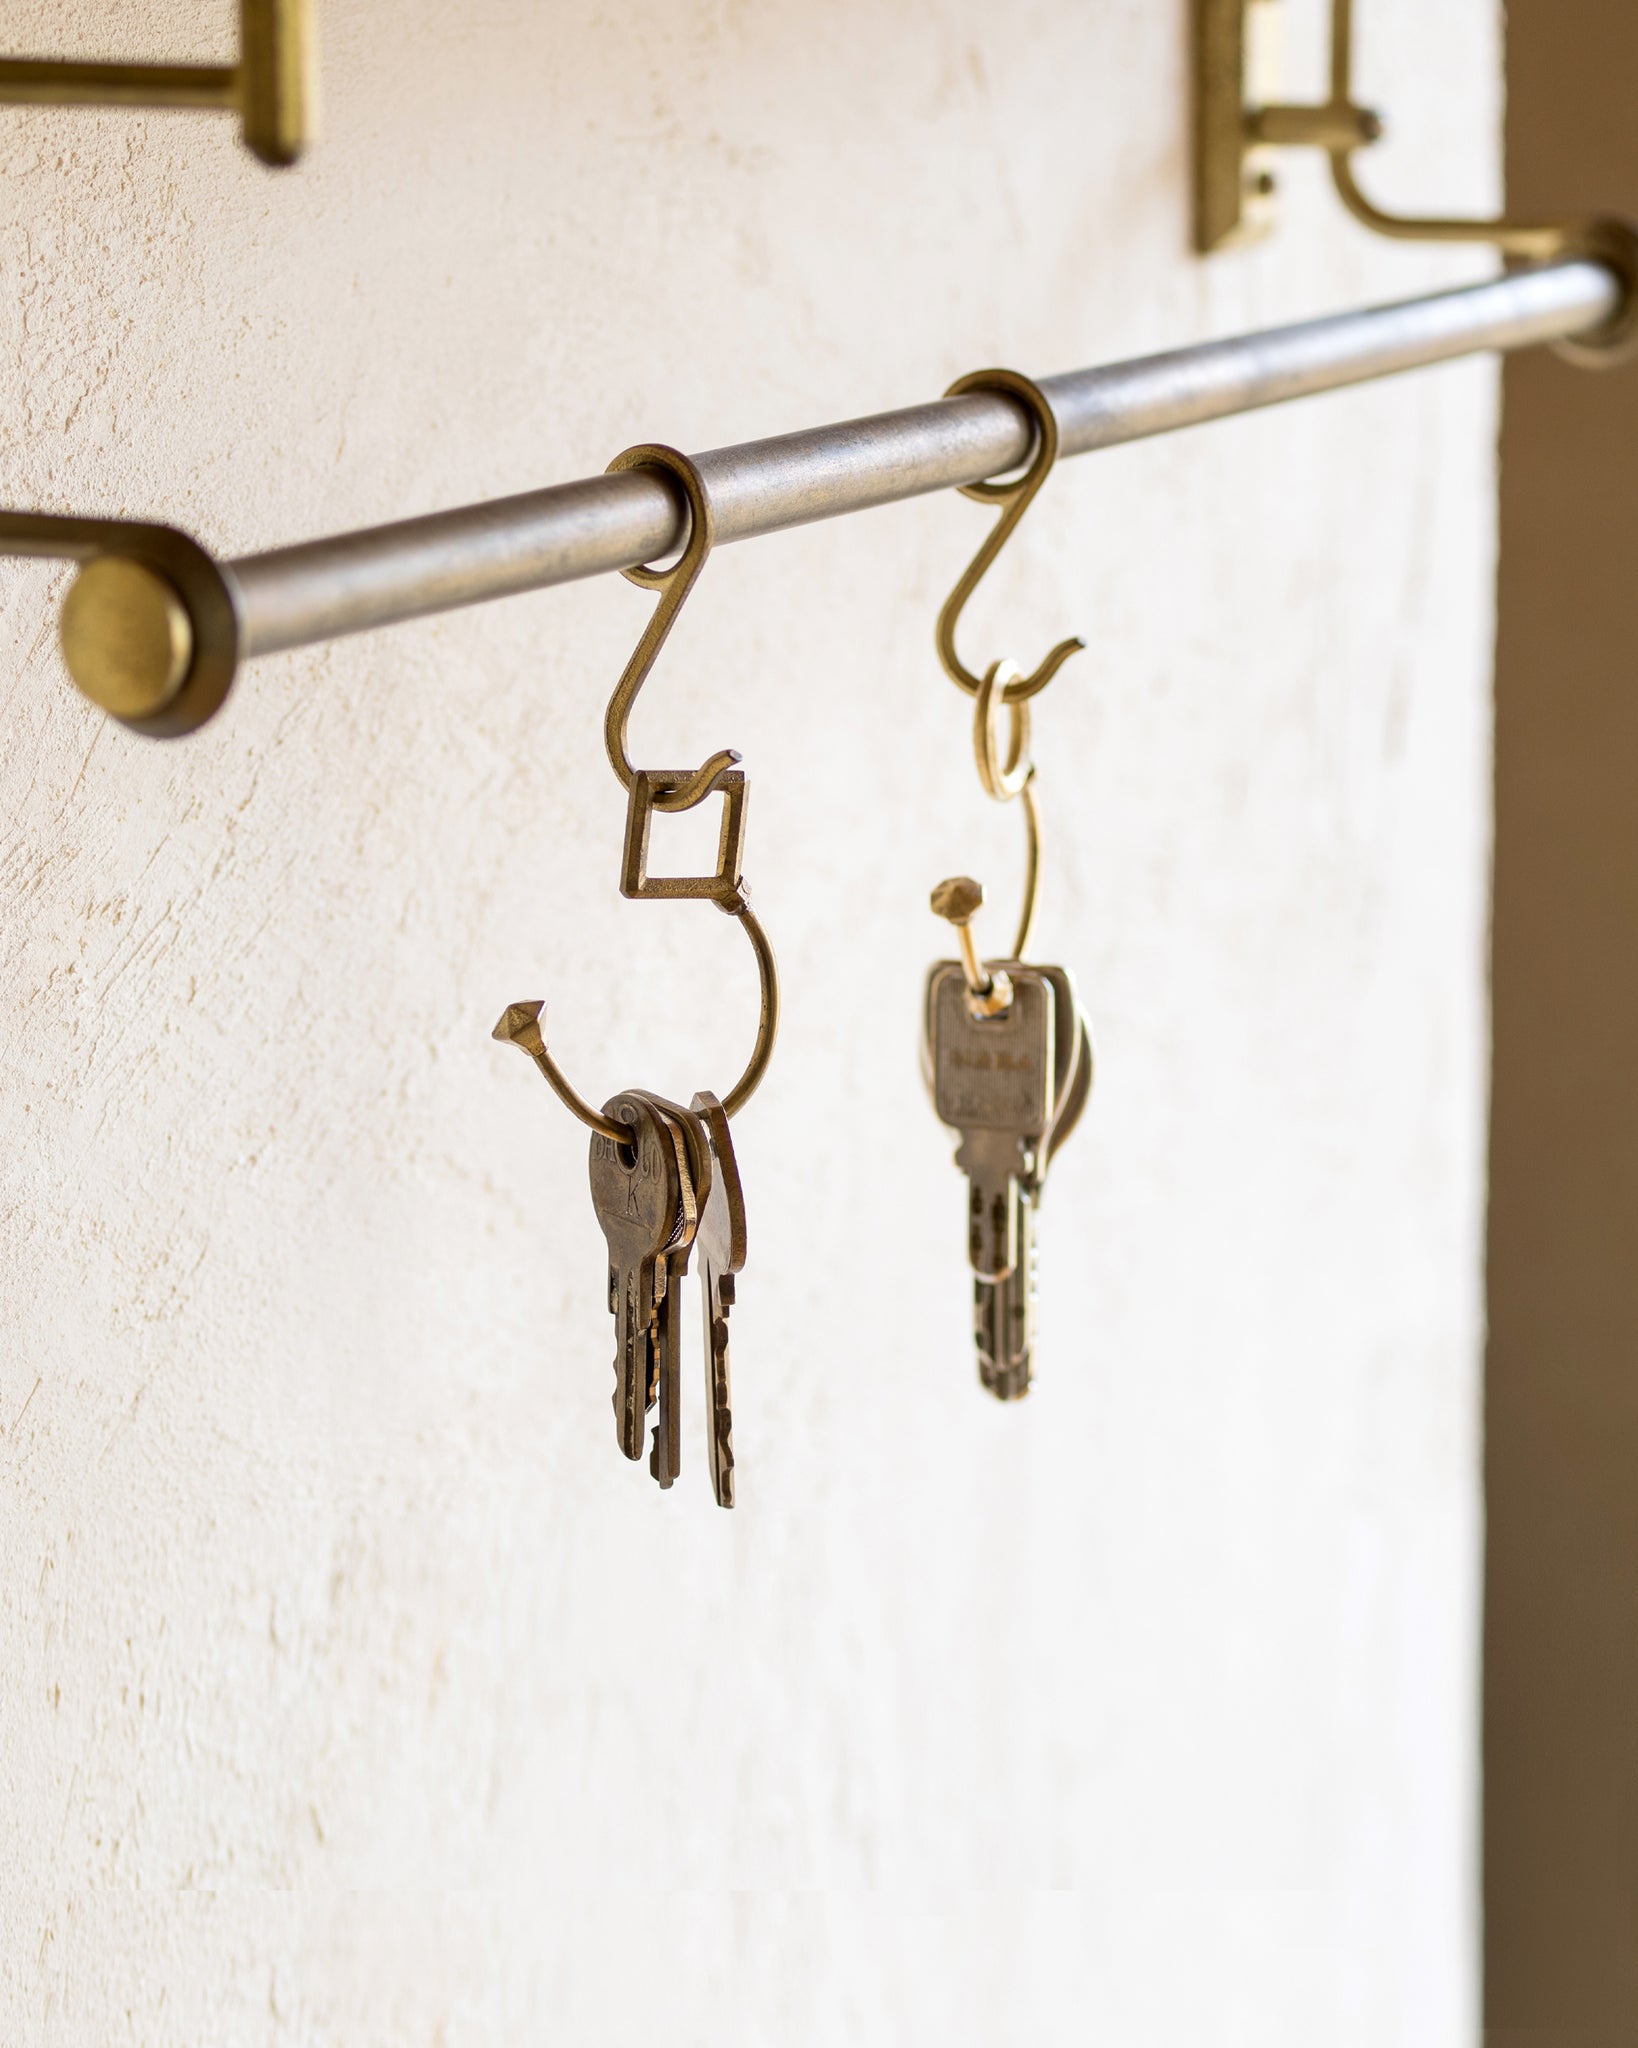 Matureware brass pipe s hooks with keys hanging on hooks